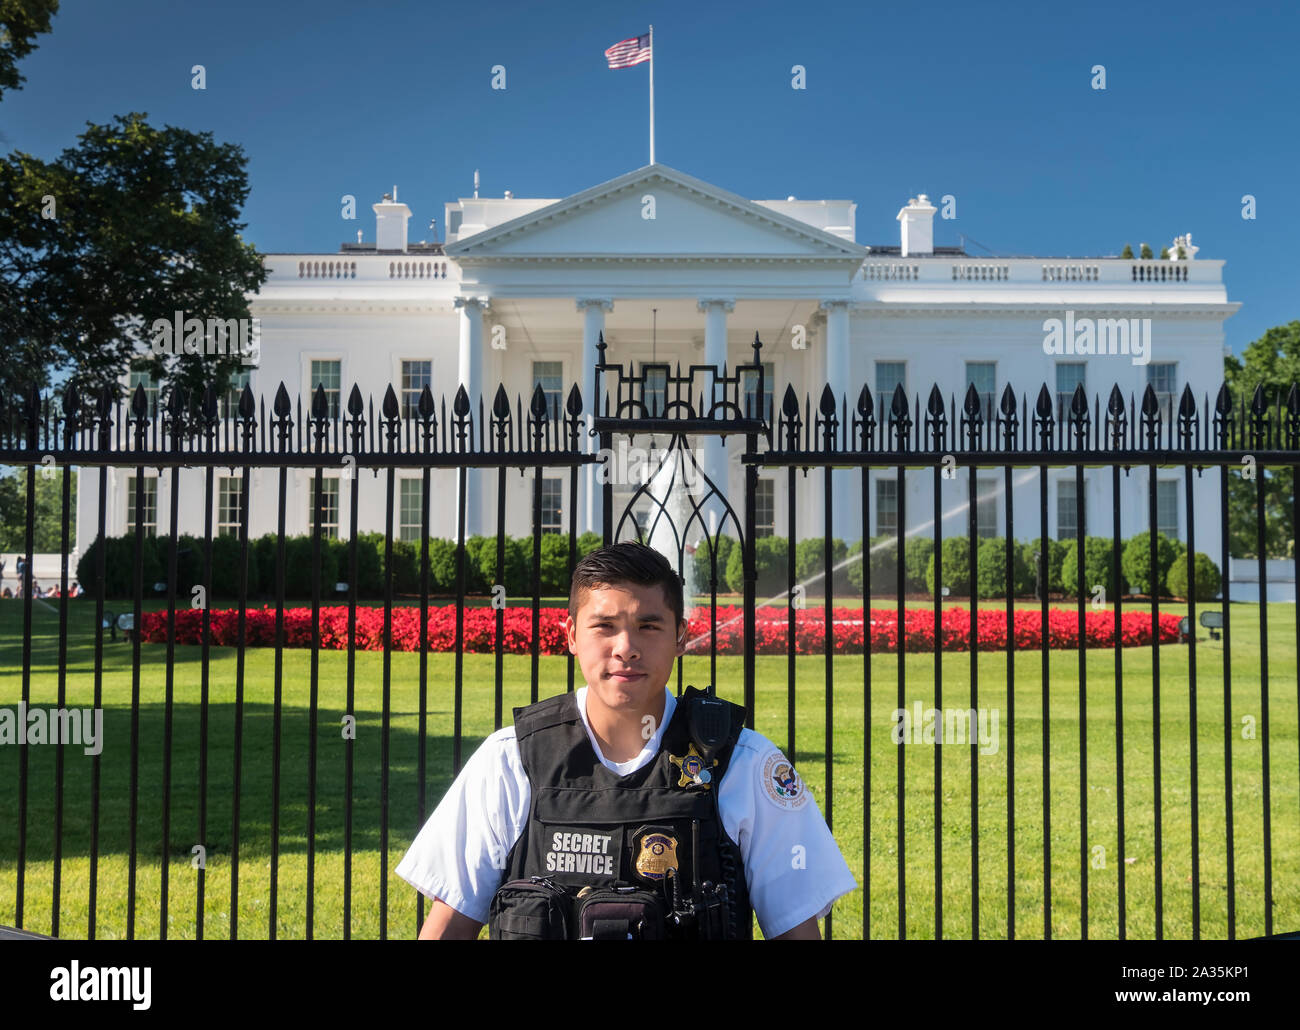 Secret Service Agent Guarding The White House, Washington DC, USA Stock Photo